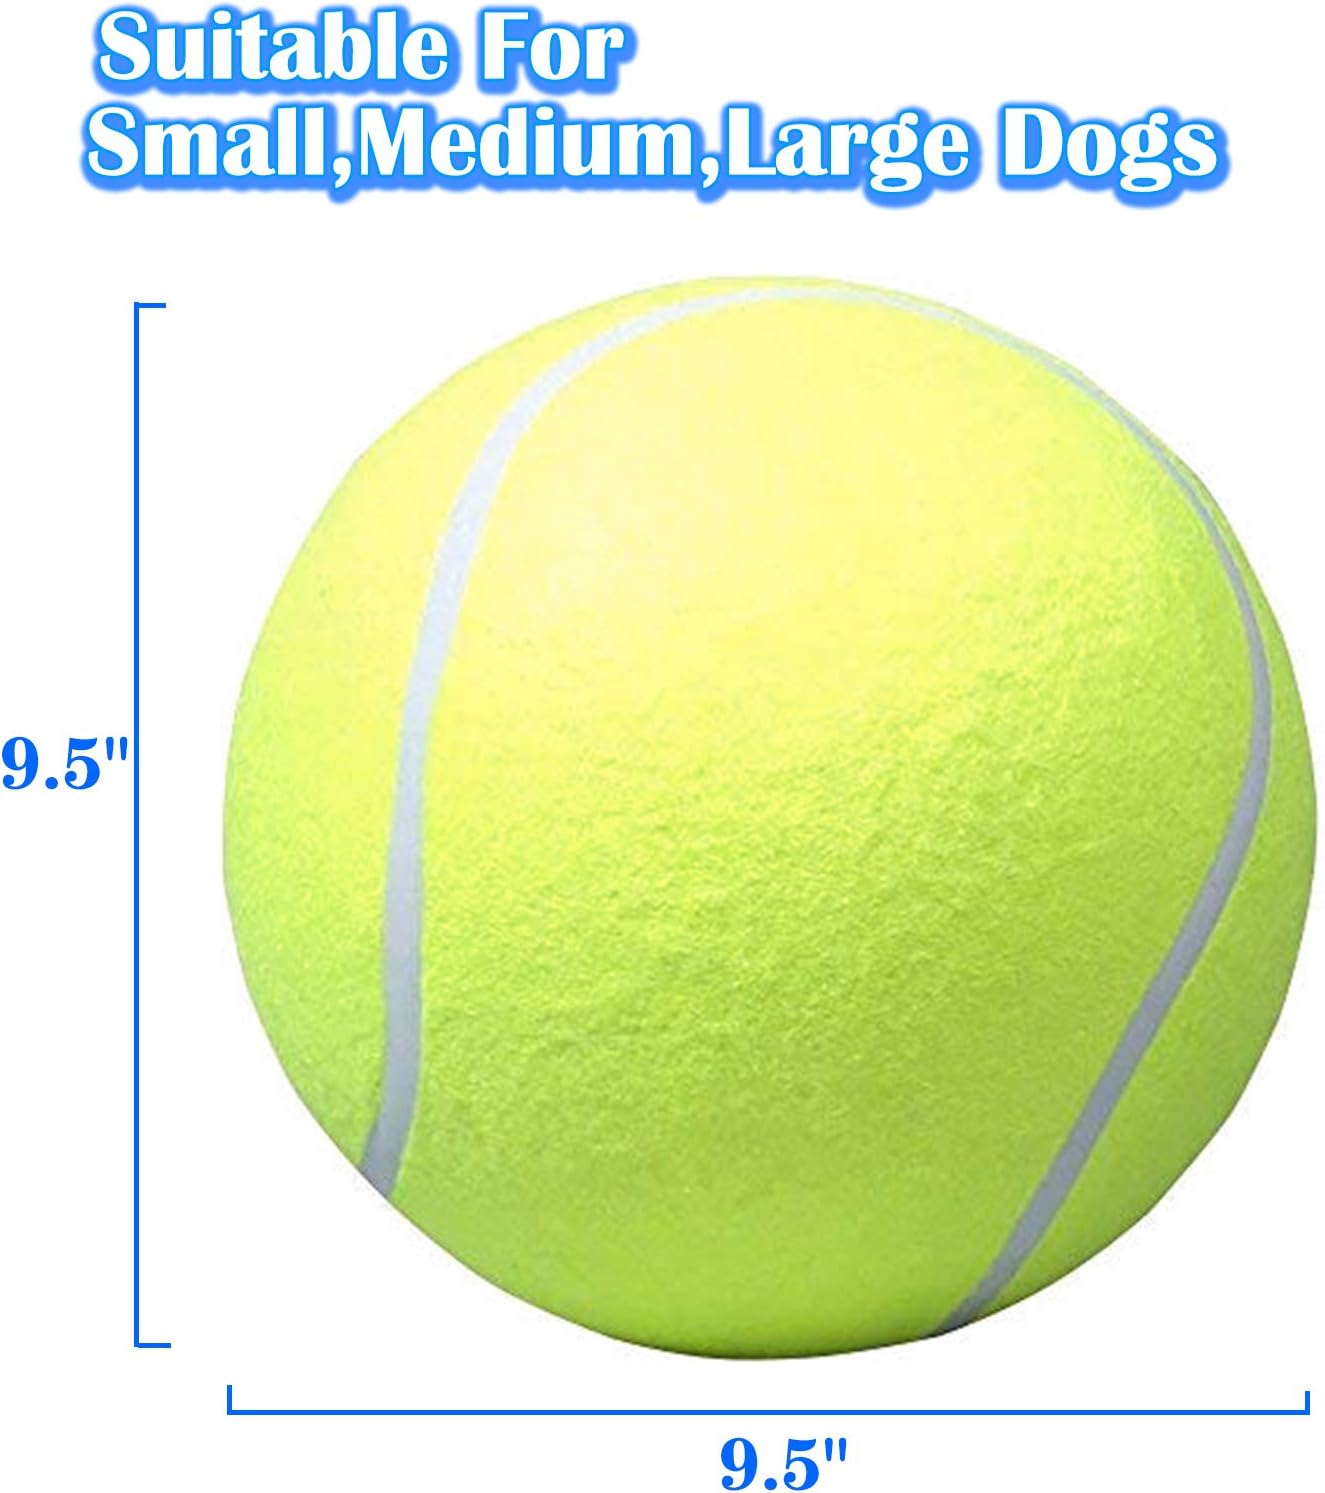 Pelota de tenis gigante de 9.5 pulgadas para perro, juguetes grandes para